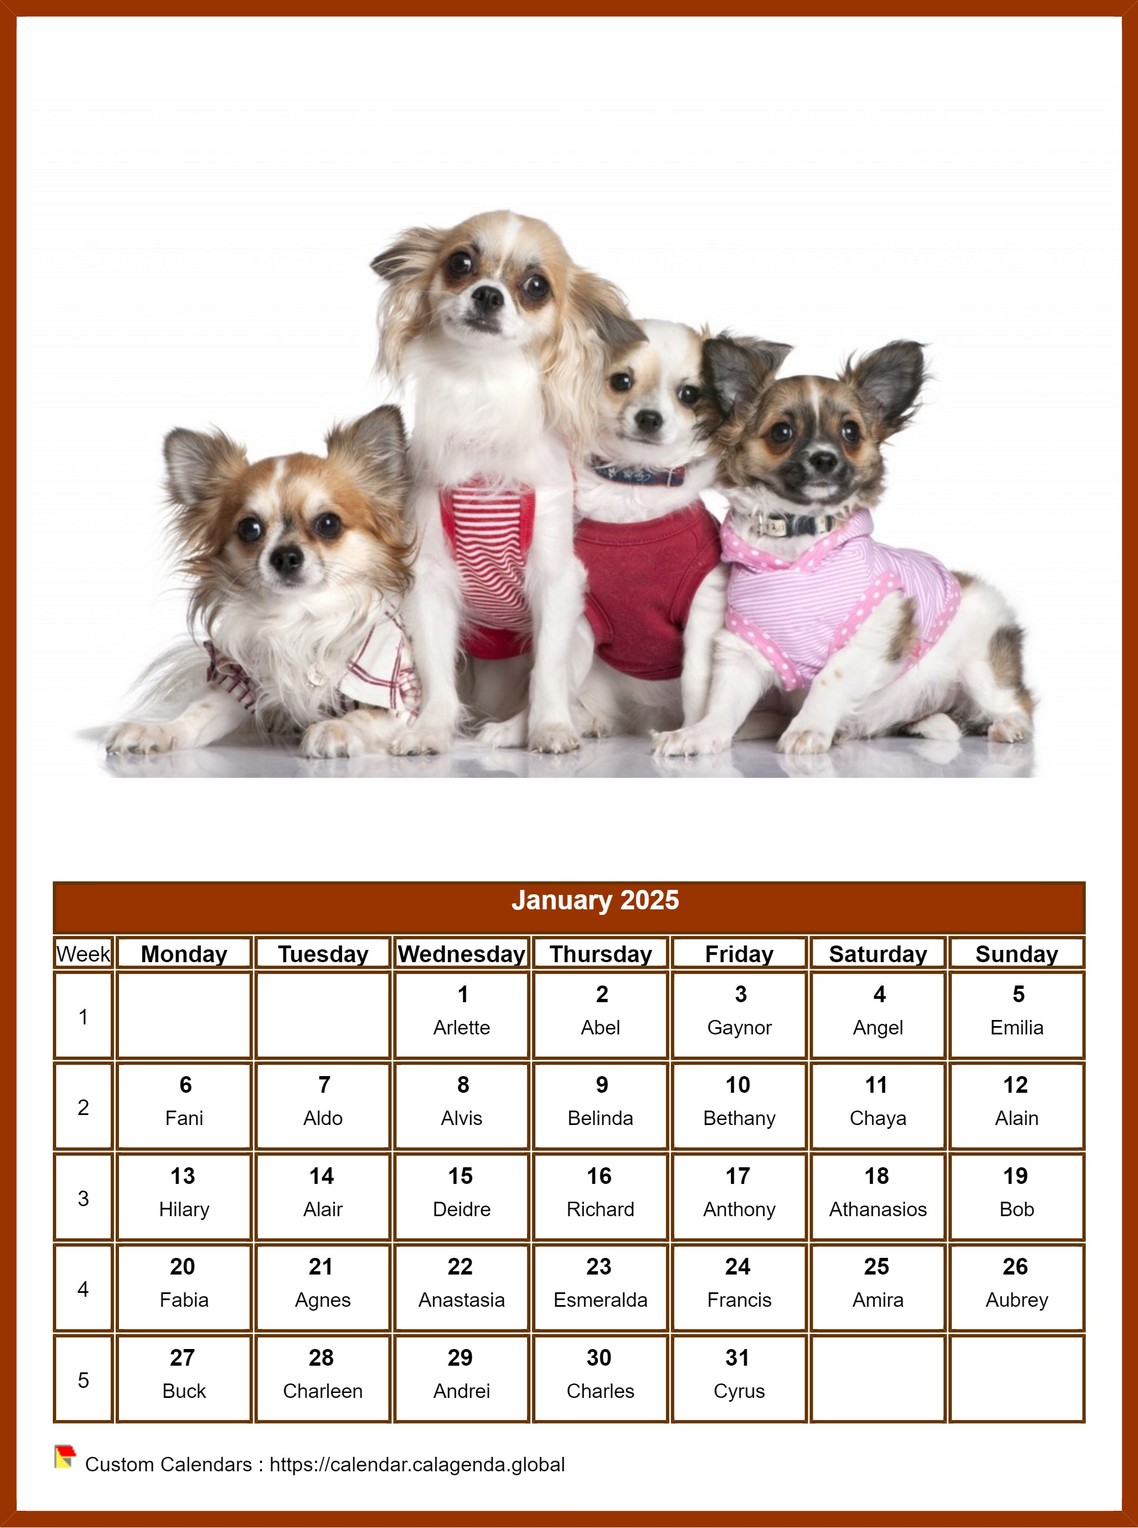 Calendar January 2025 dogs